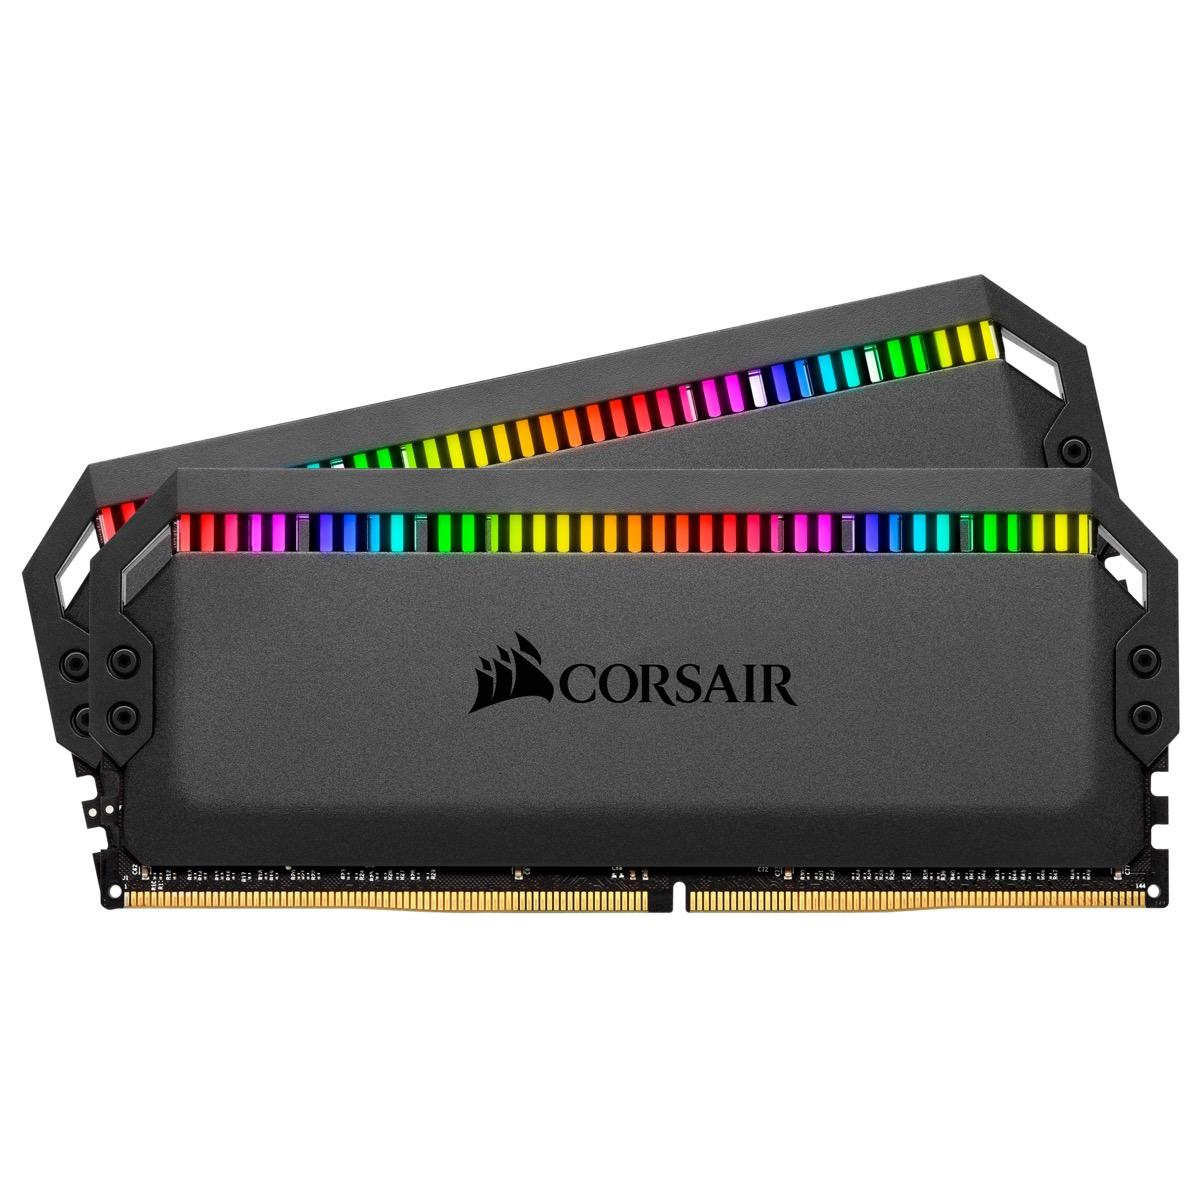 Памет Corsair Dominator Platinum RGB Black 16GB(2x8GB) DDR4 PC4-28800 3600MHz CL18 CMT16GX4M2C3600C18